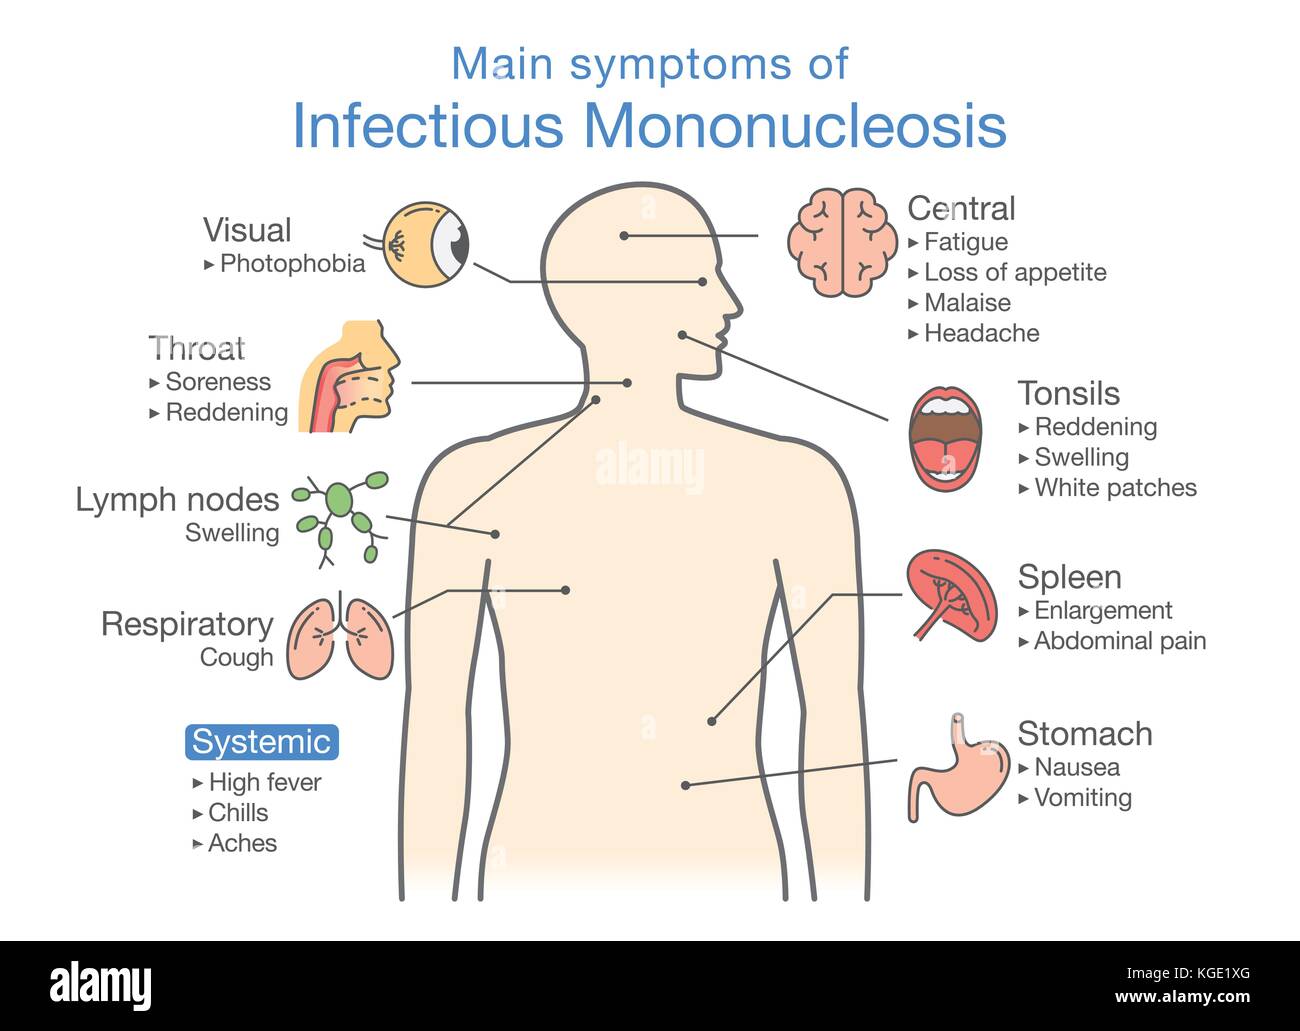 Symptoms of Infectious Mononucleosis disease. Stock Vector